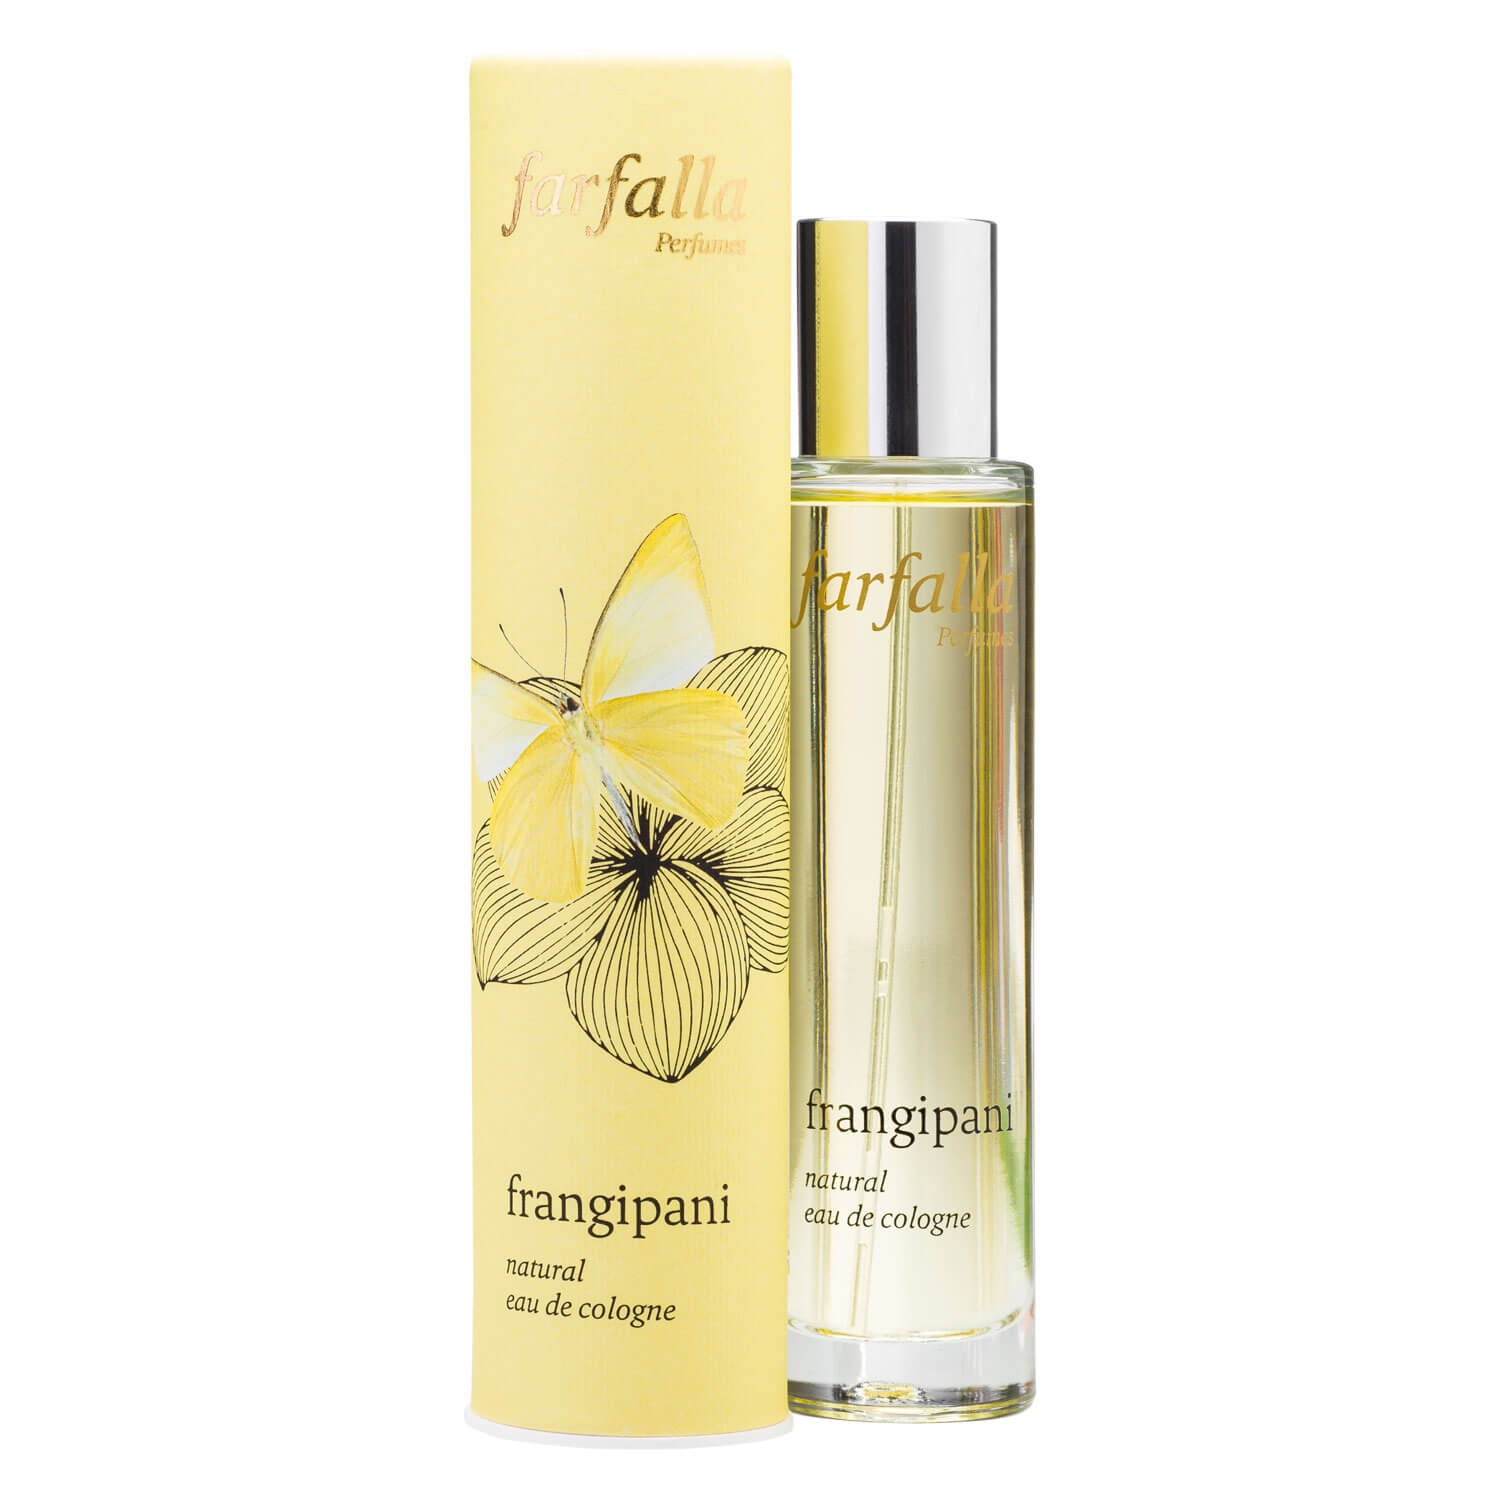 Product image from Farfalla Fragrance - Frangipani Natural Eau de Cologne